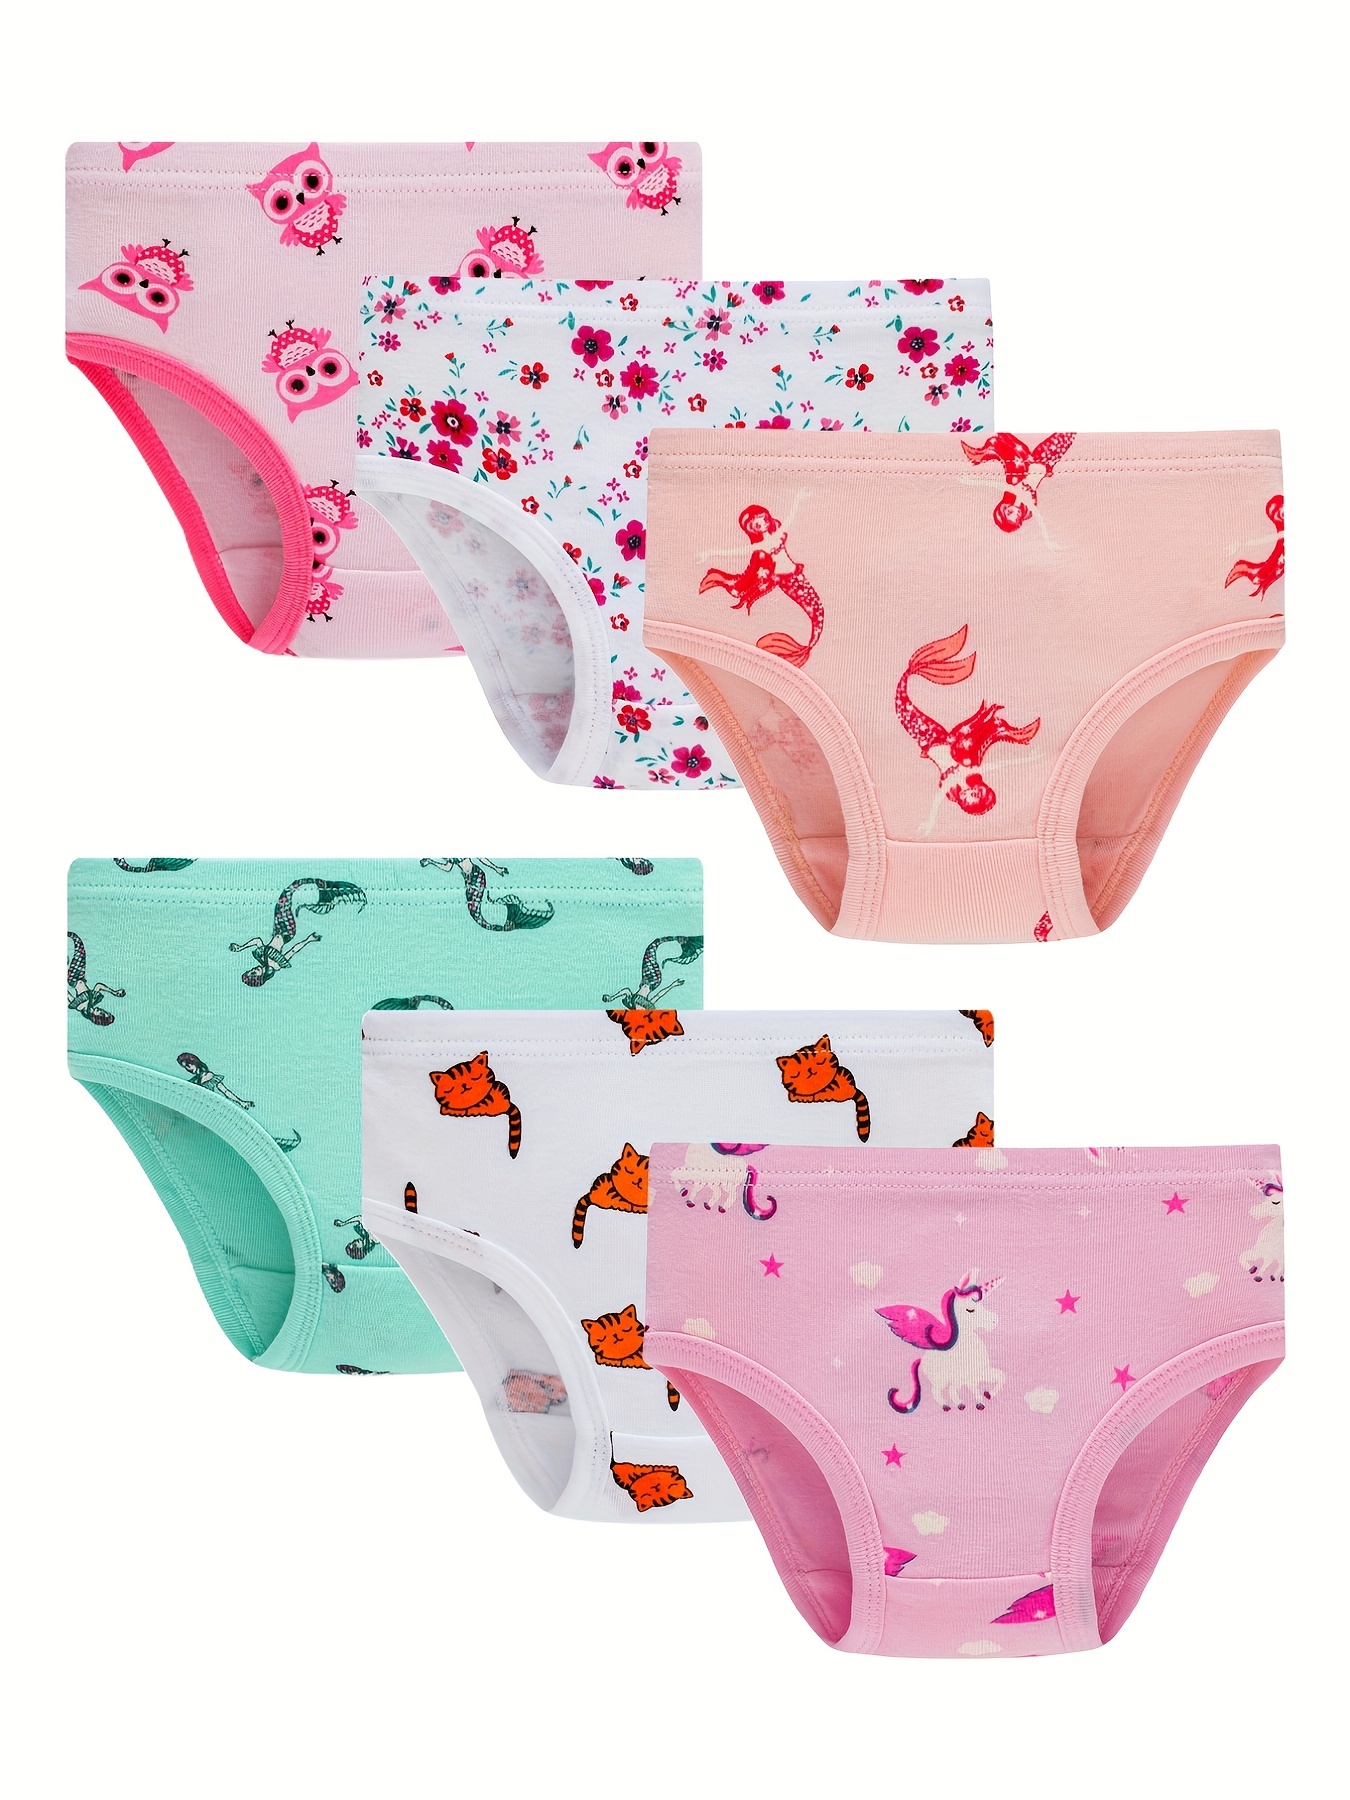 Little Girls Panties Toddler Panties Big Kids Underwear Soft